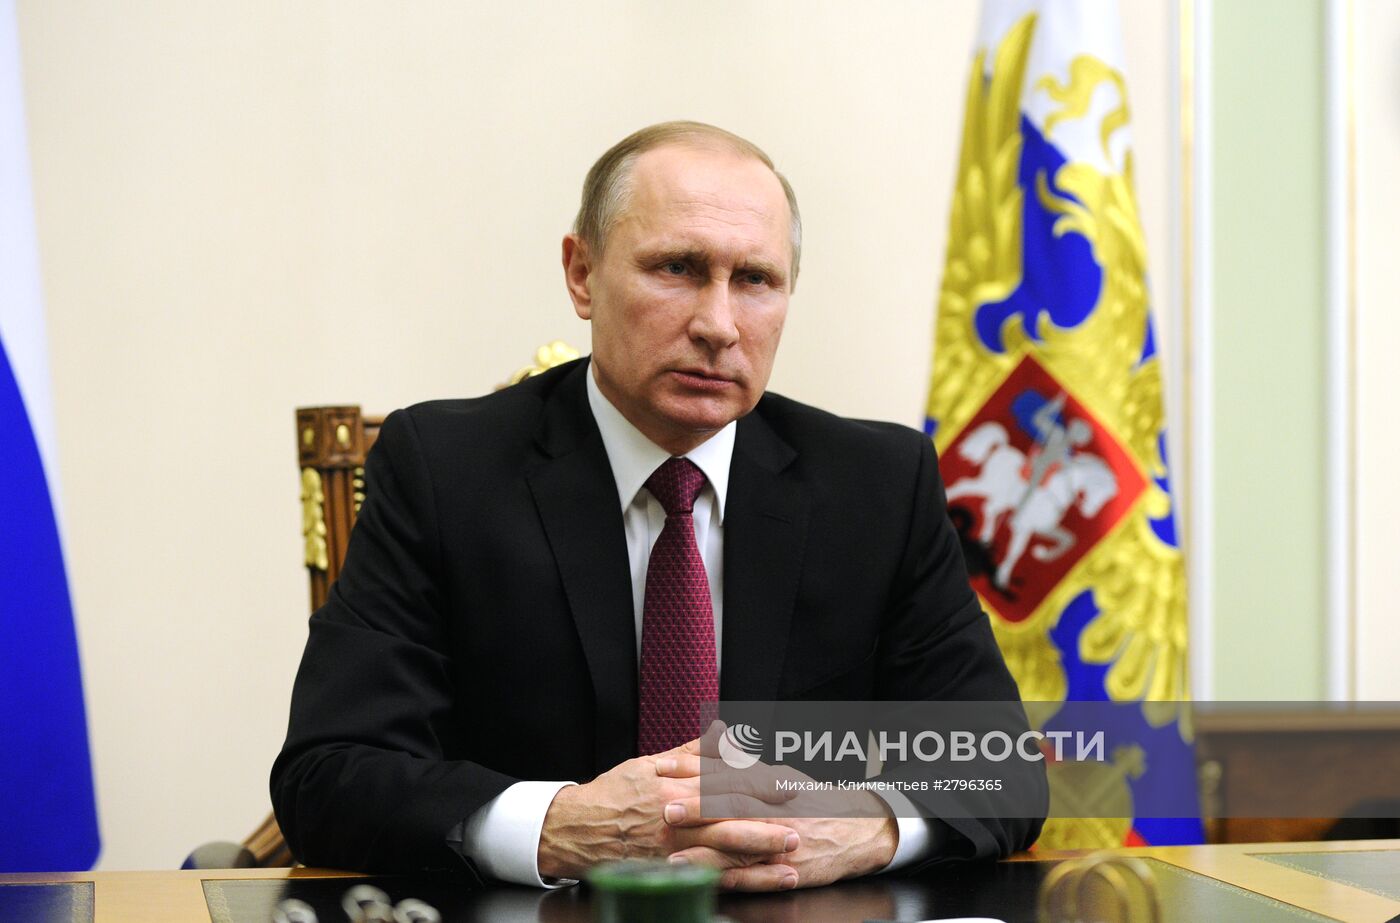 Обращение президента РФ В. Путина в связи с принятием совместного заявления России и США по Сирии